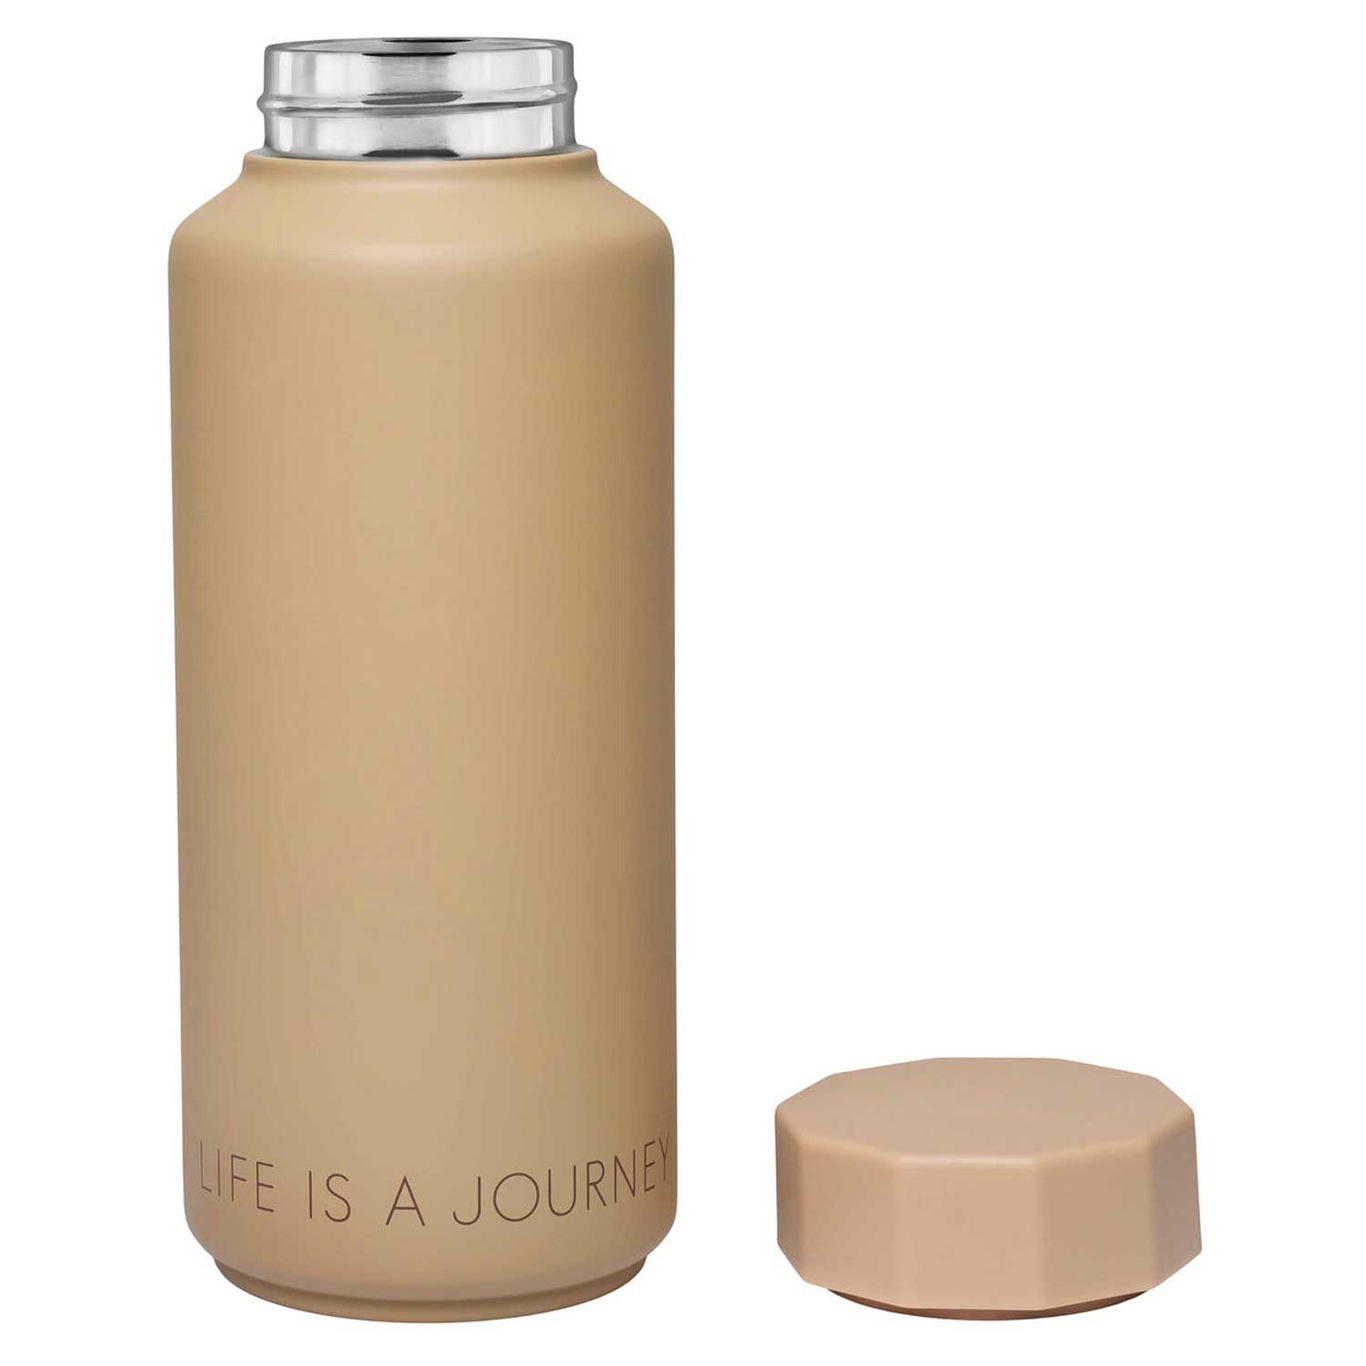 https://royaldesign.com/image/2/design-letters-thermos-bottle-50-cl-27?w=800&quality=80